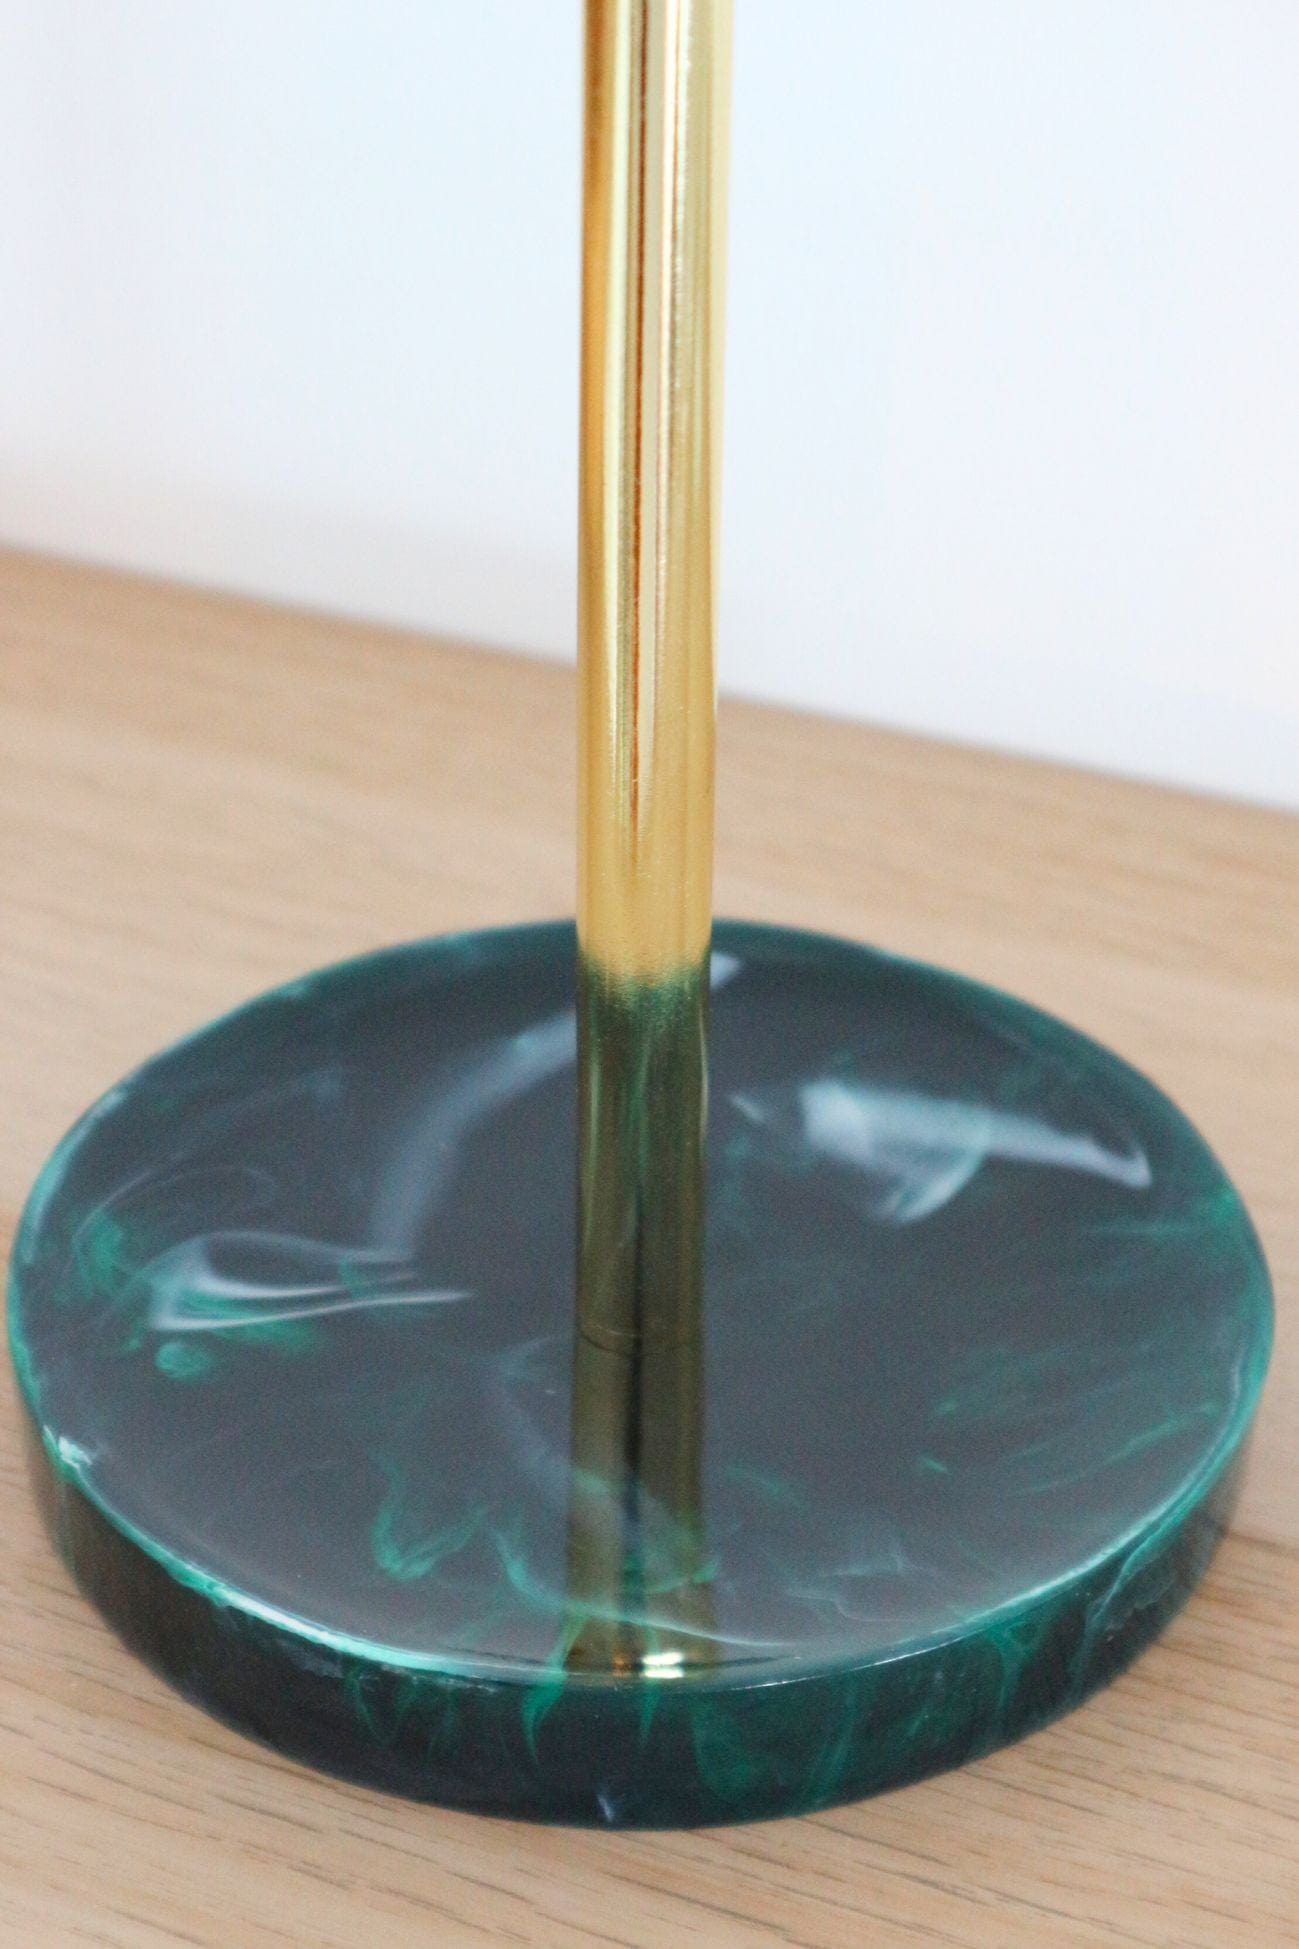 Item International Jibaro Jibaro - Specchio tondo con base in resina verde e finiture dorate | Item International